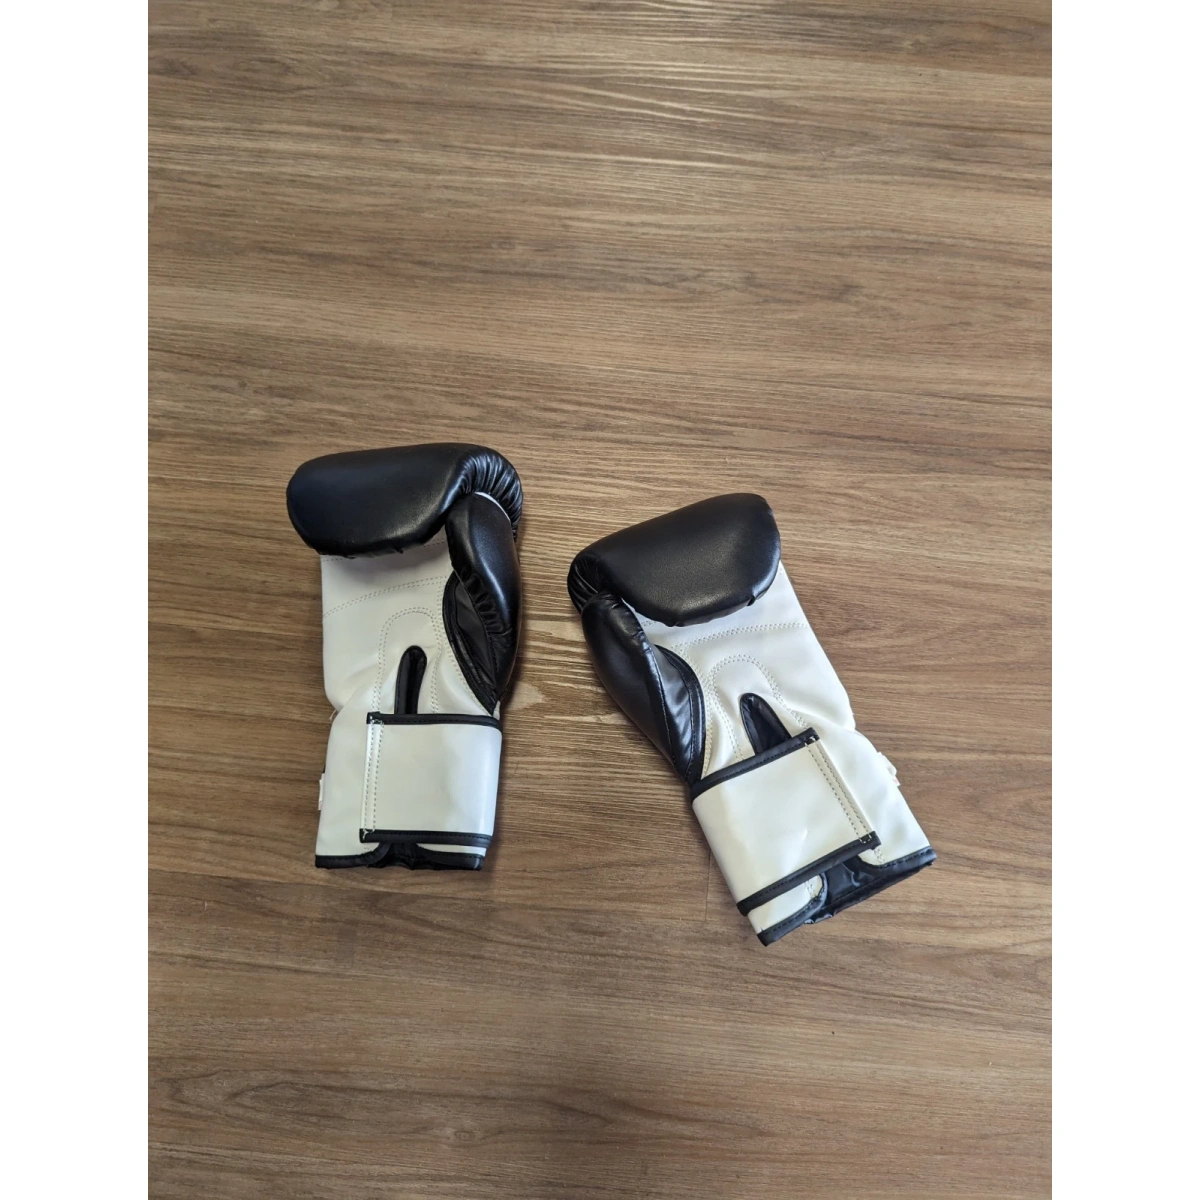 boxing gloves 12oz palm